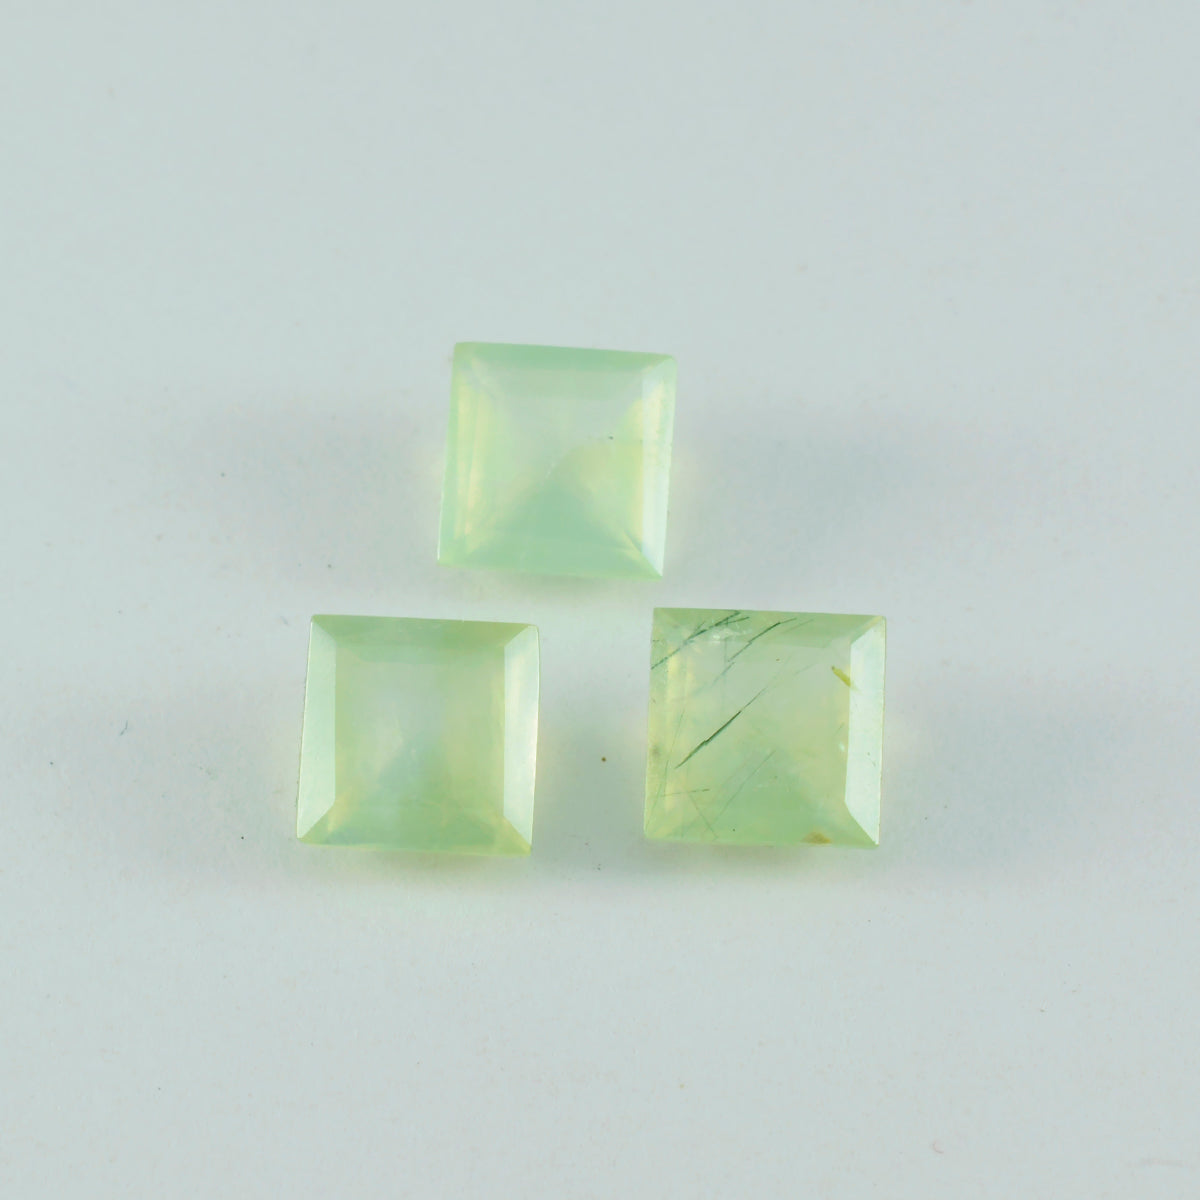 Riyogems 1PC Green Prehnite Faceted 11x11 mm Square Shape astonishing Quality Loose Gemstone